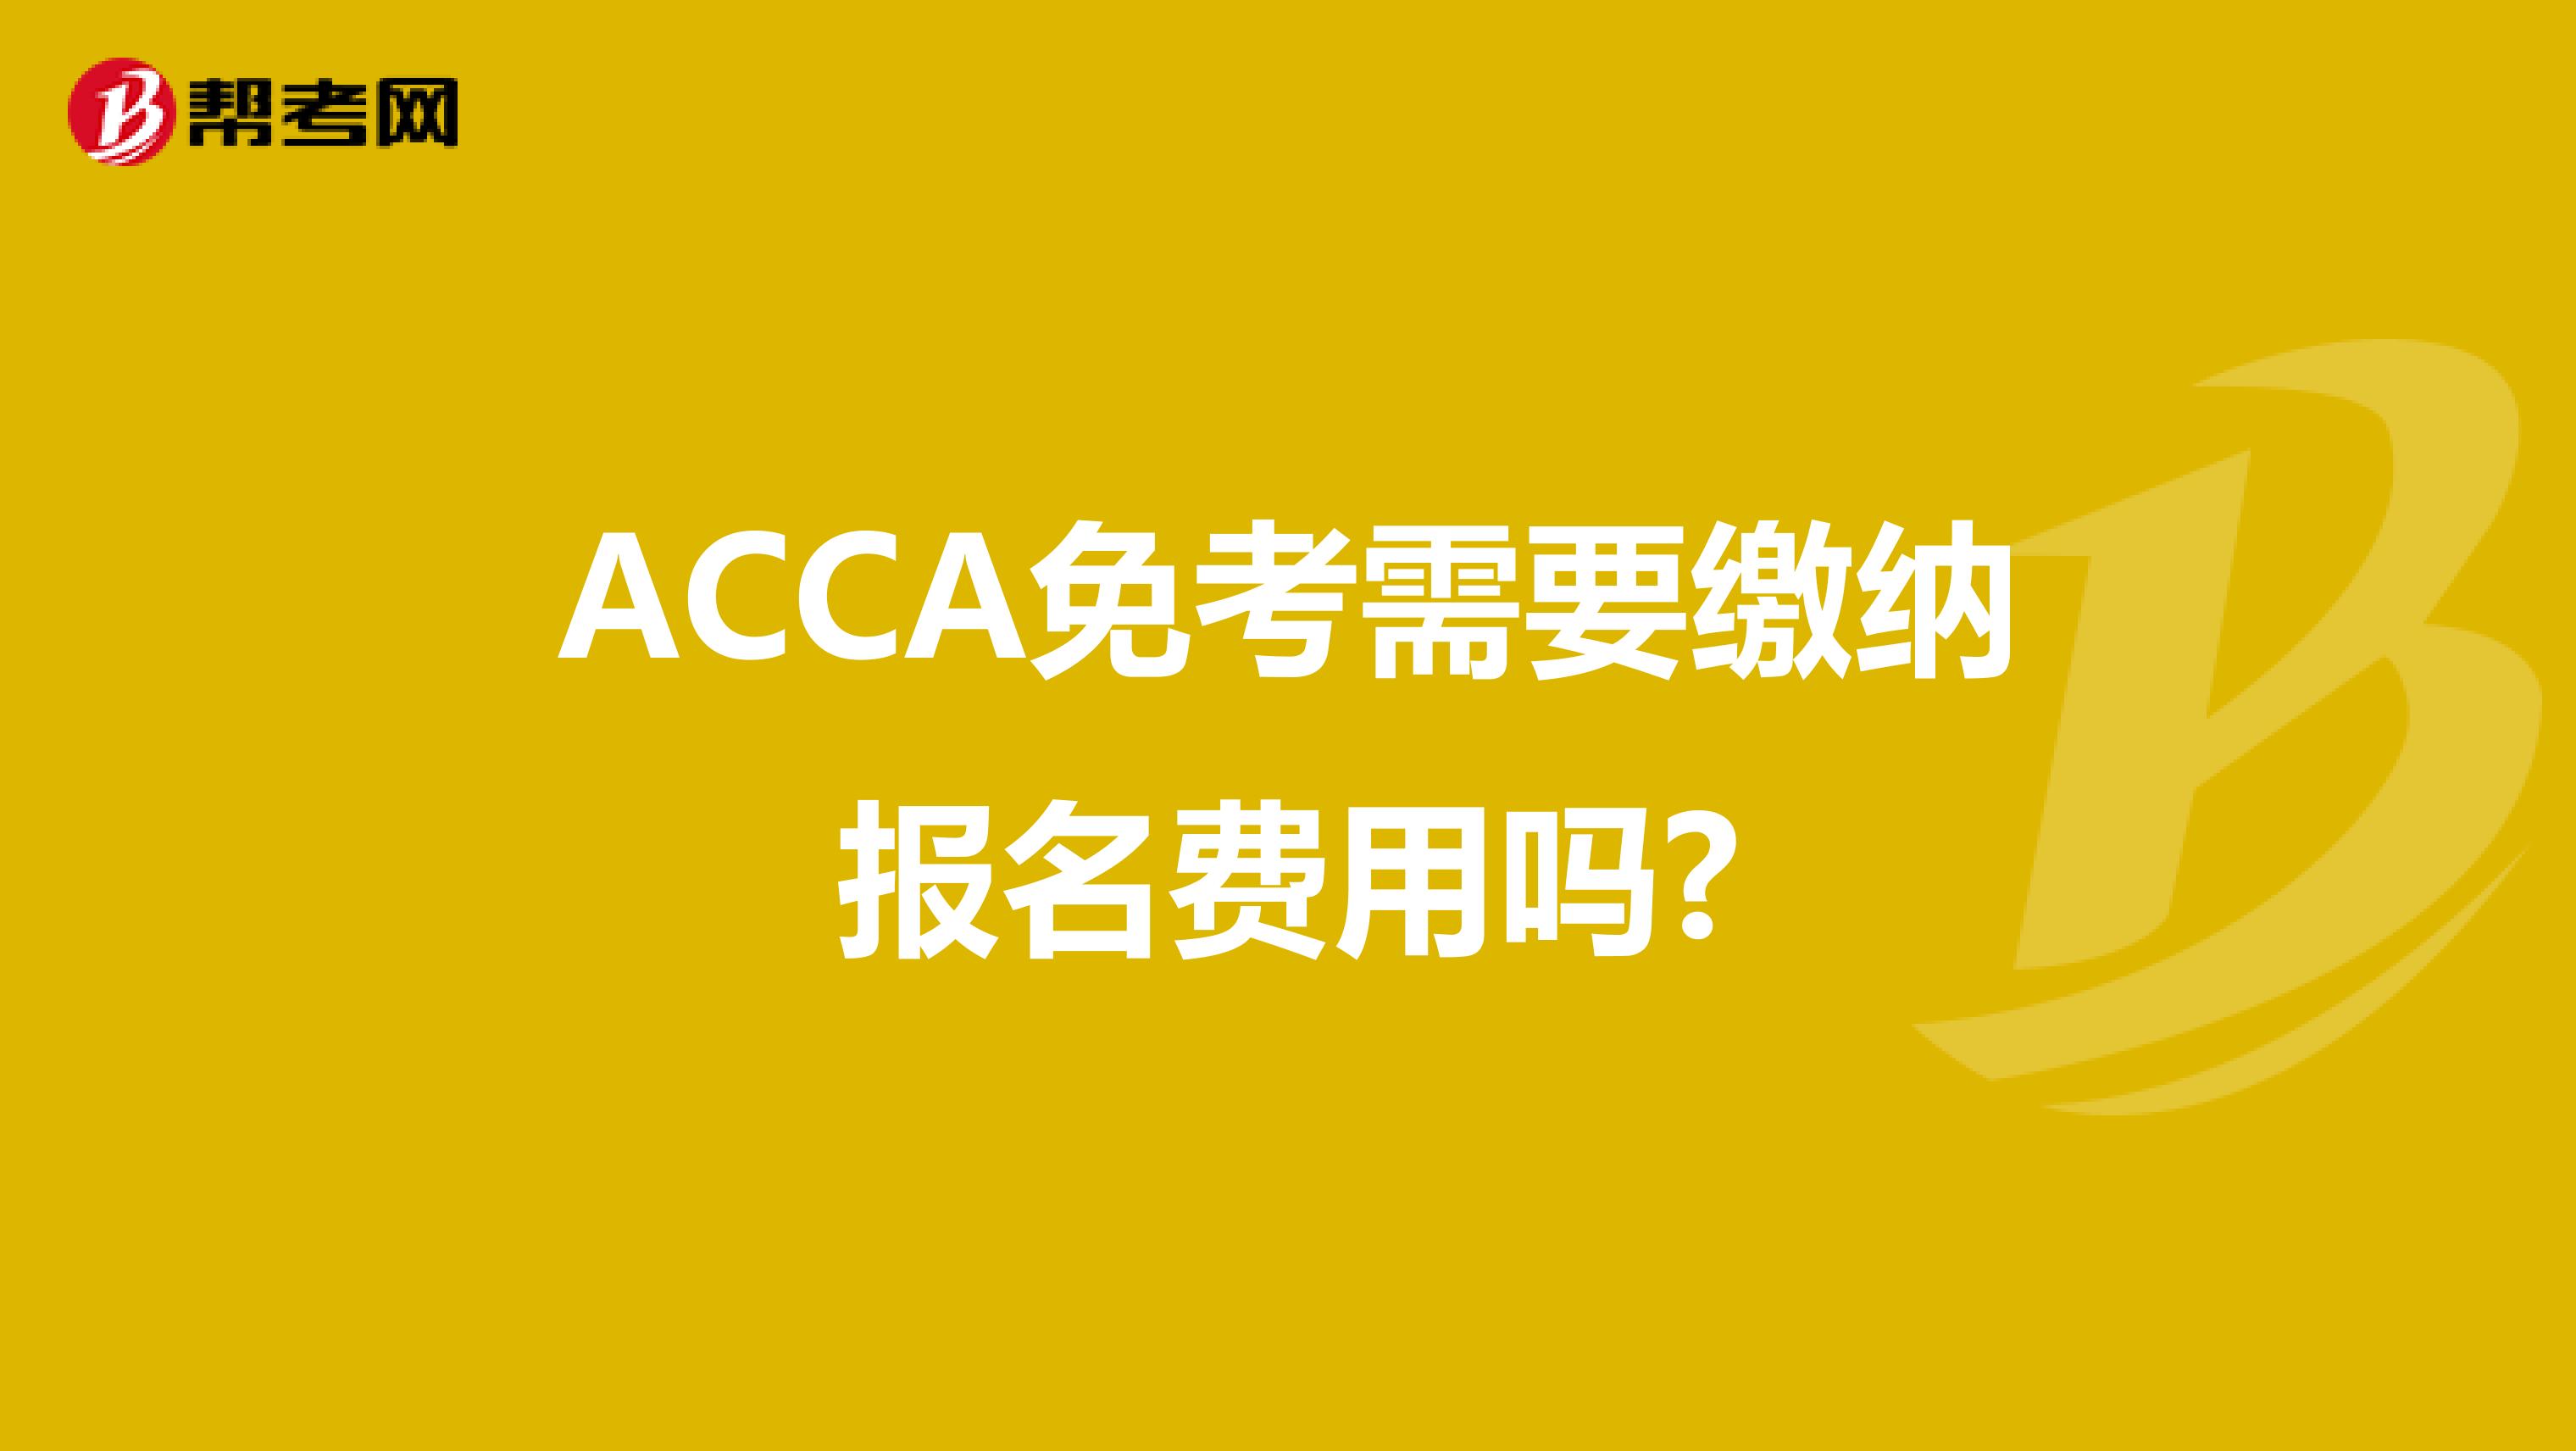 ACCA免考需要缴纳报名费用吗?